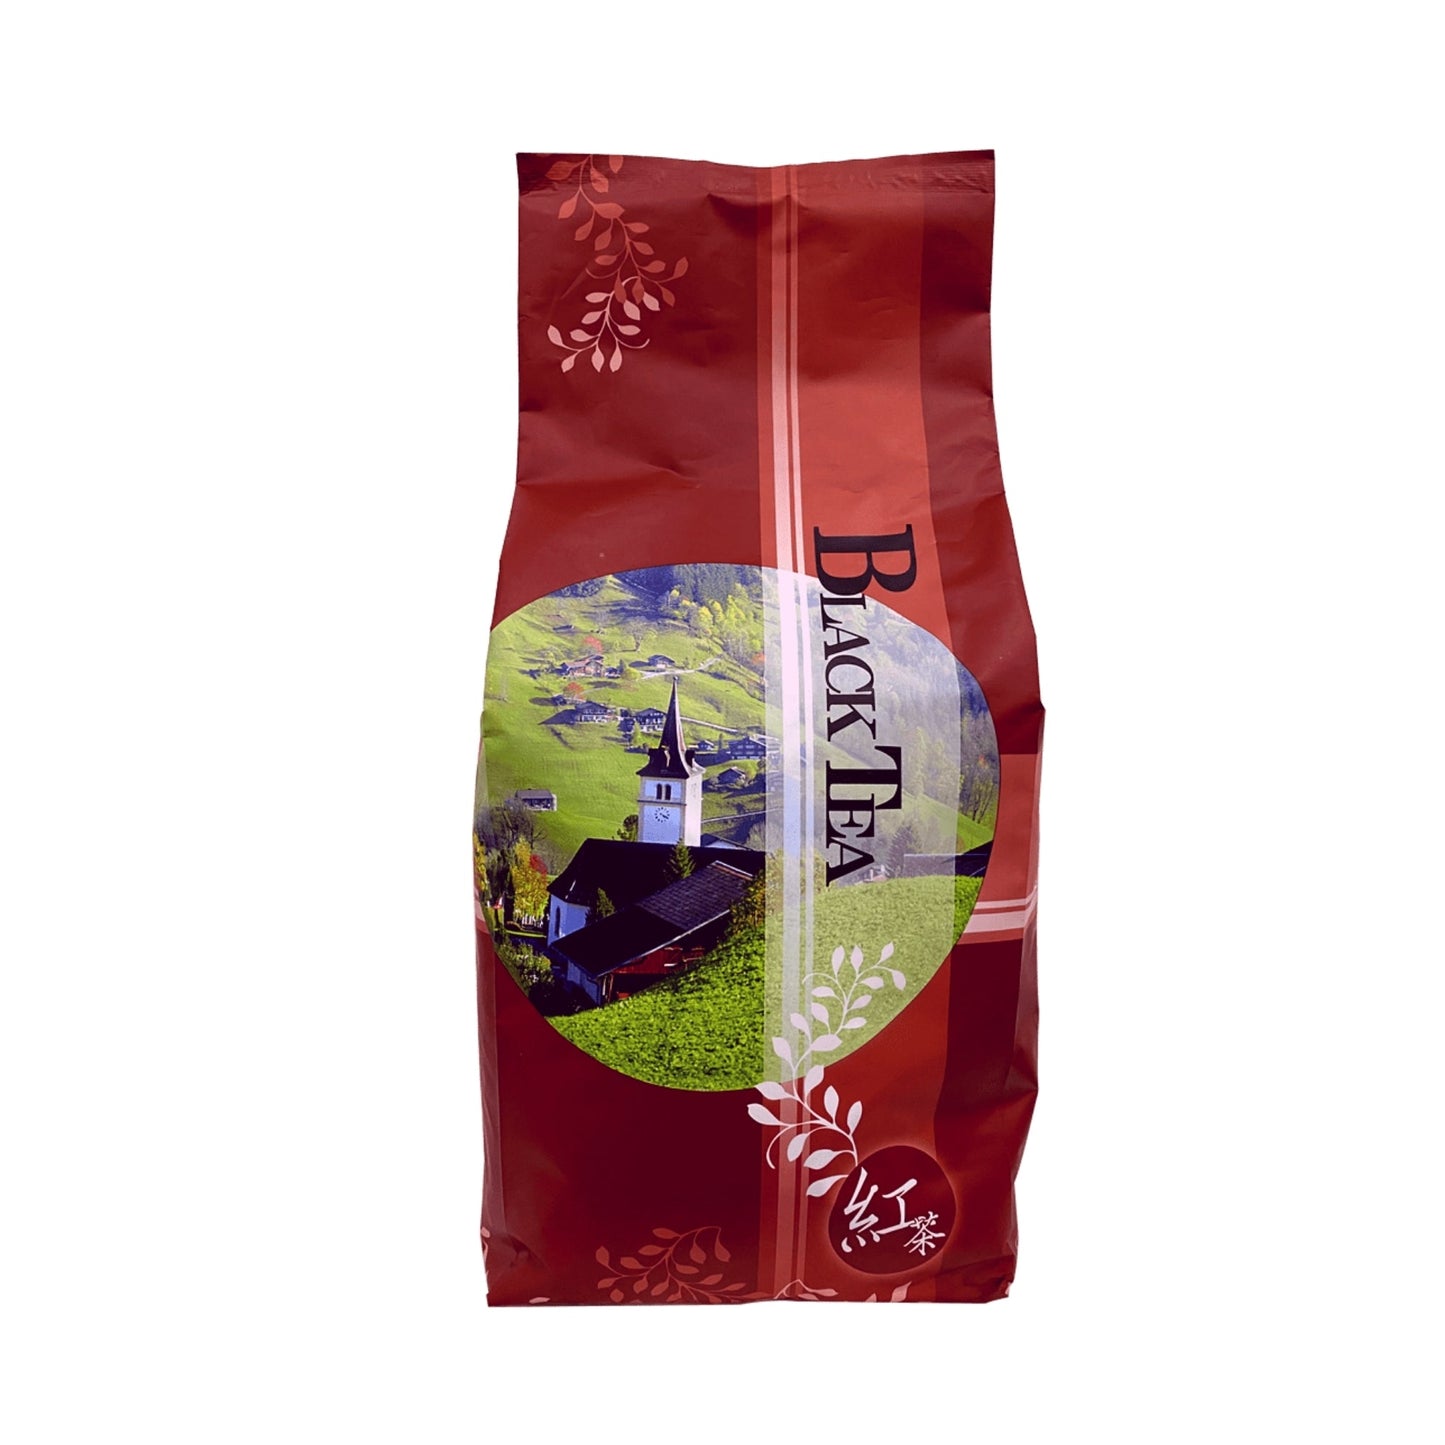 TOP Creamery Assam Black Tea 600g - Kreme City Supplies